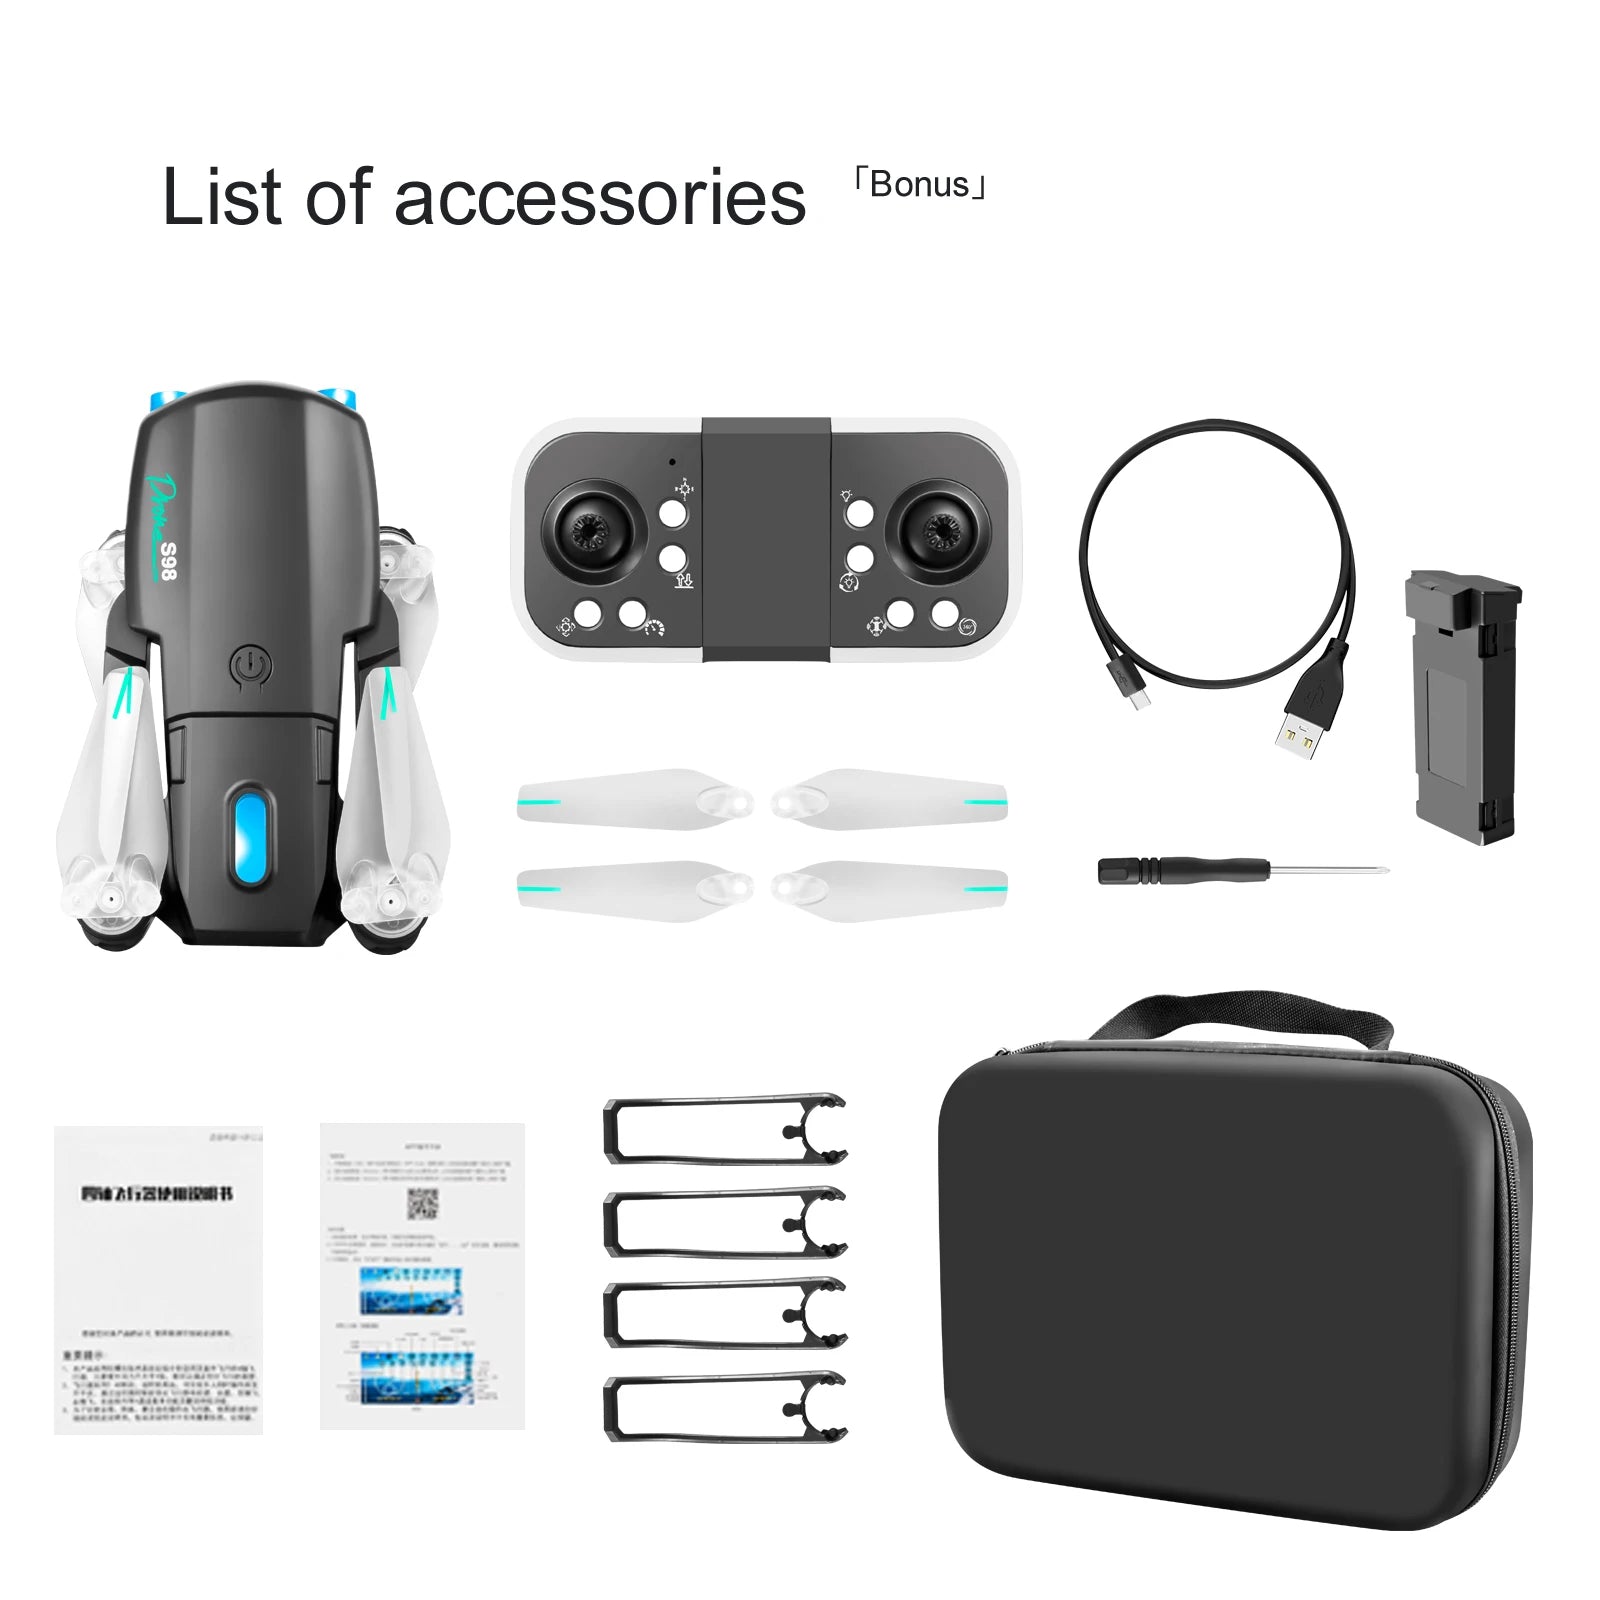 S98  Drone, list of accessories [bonus] 0 g malai